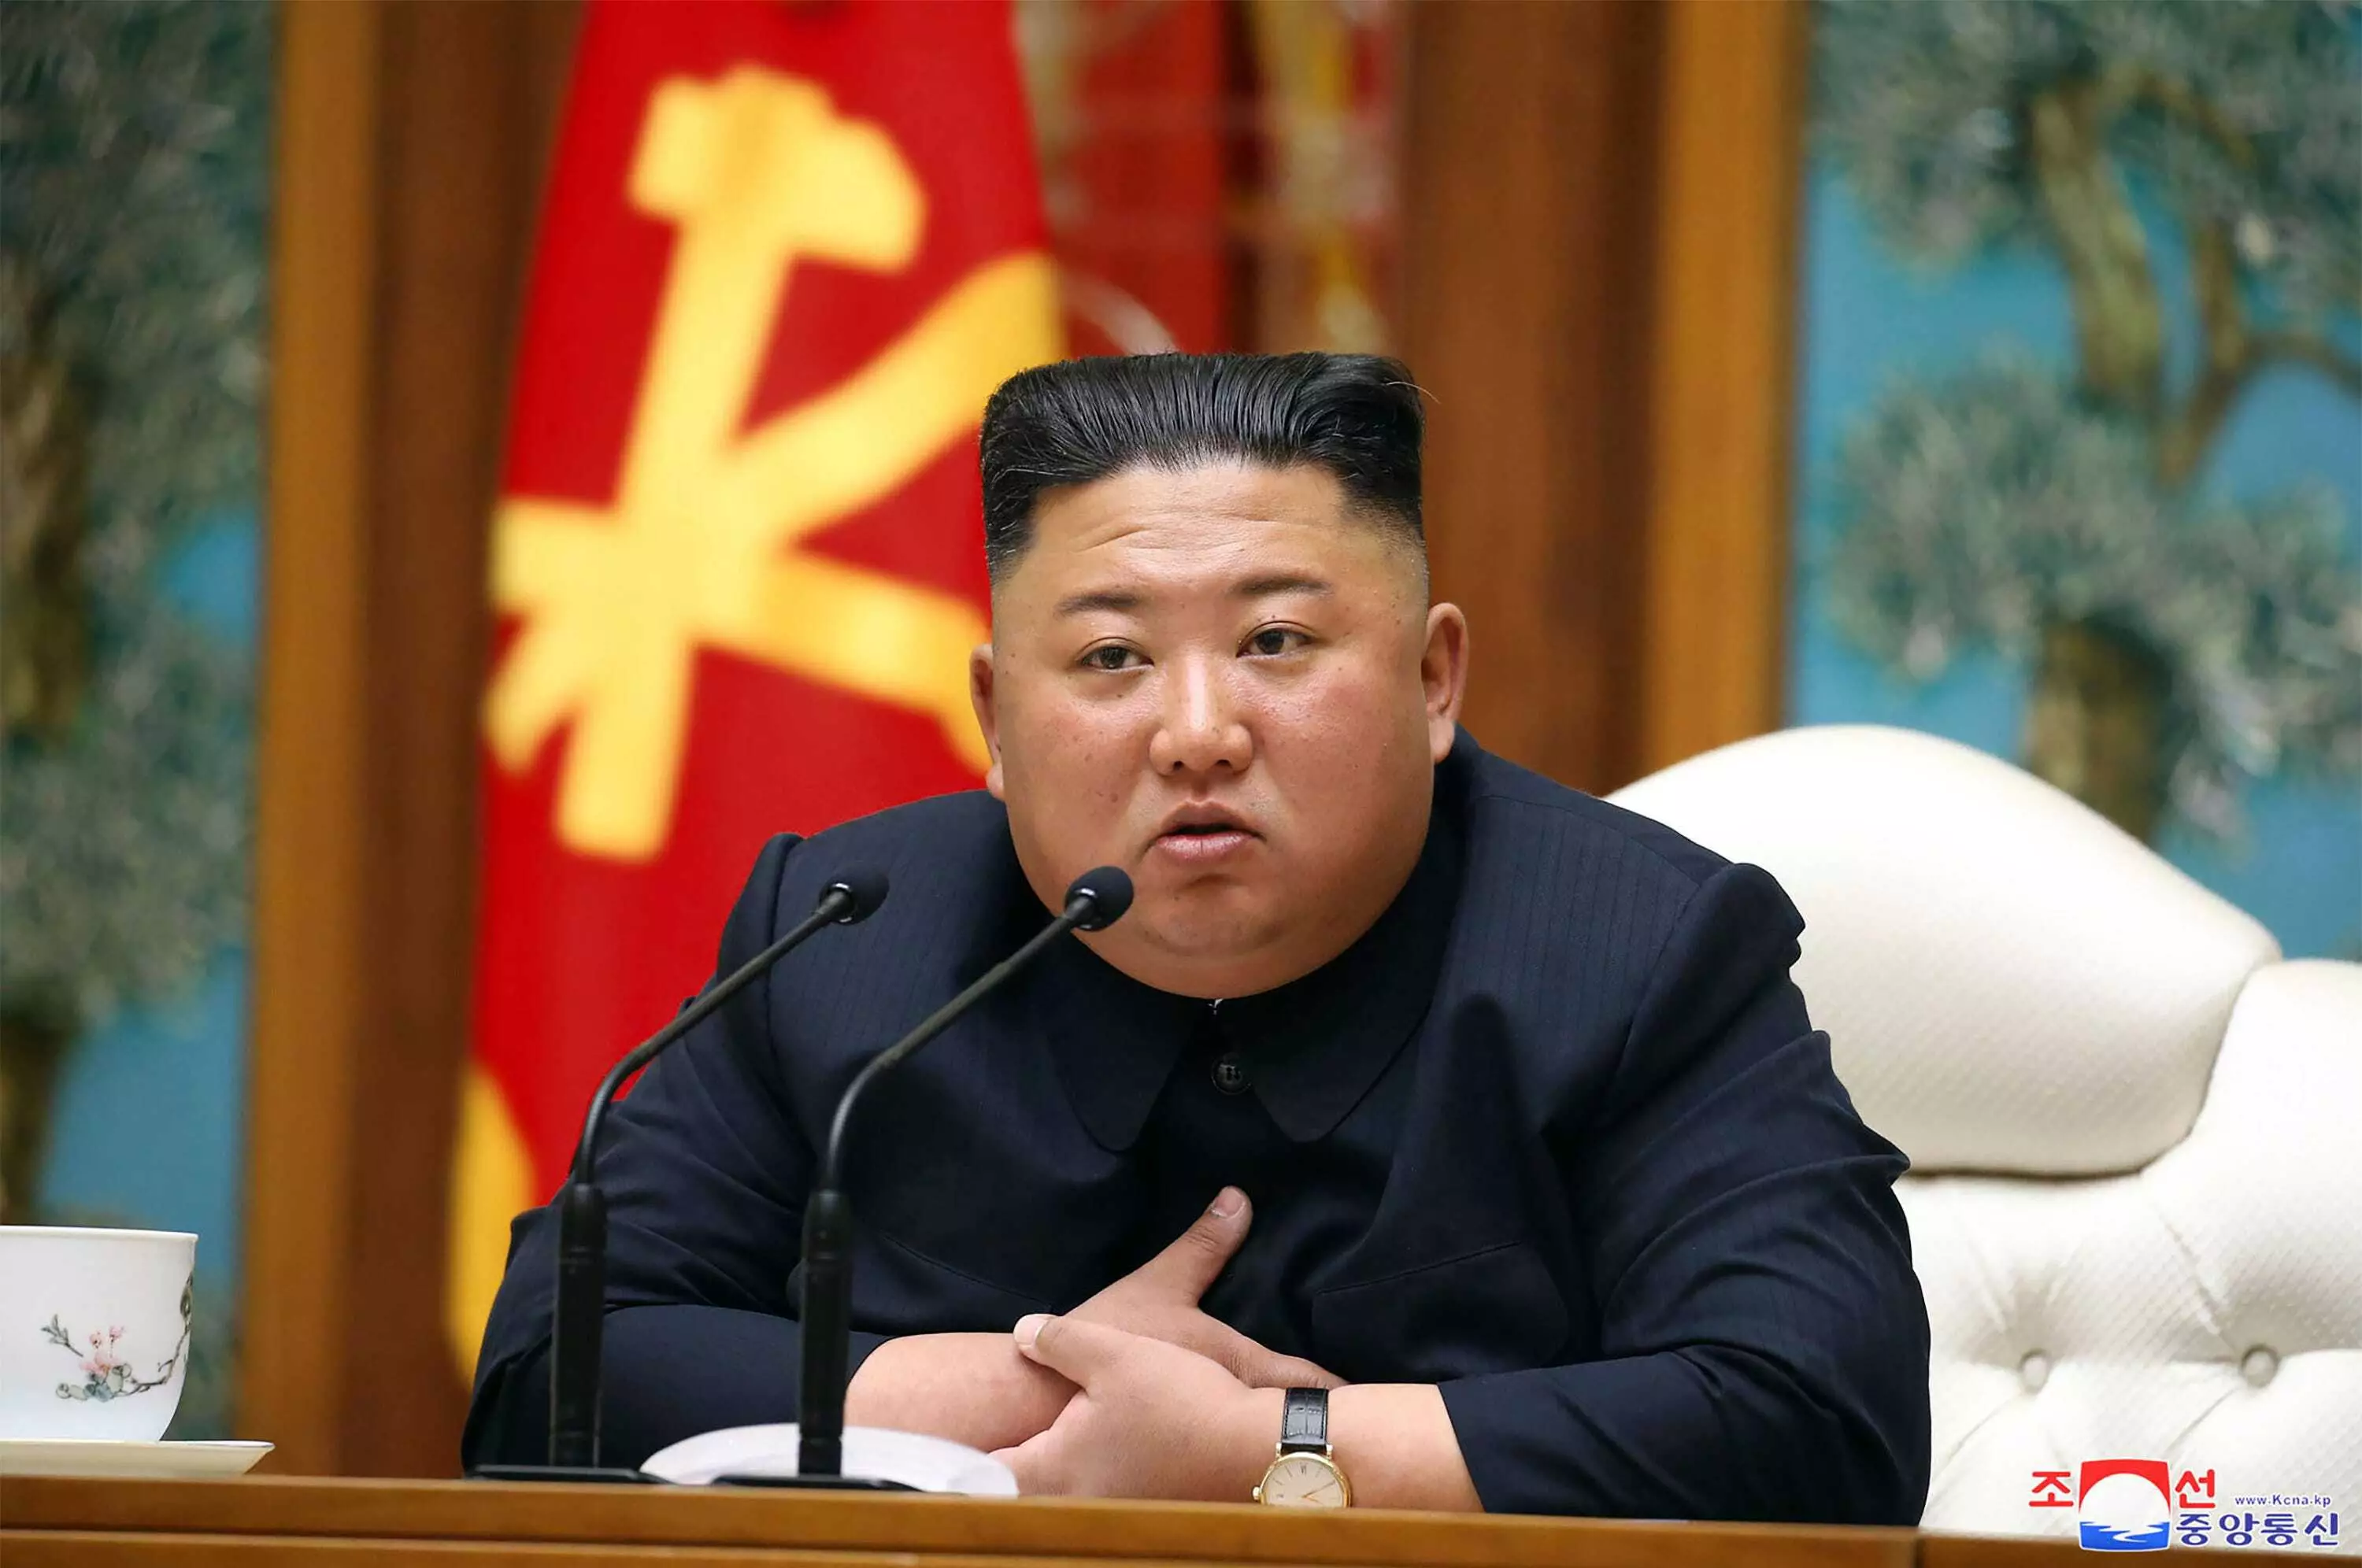 Kim Jong Un in April 2020.